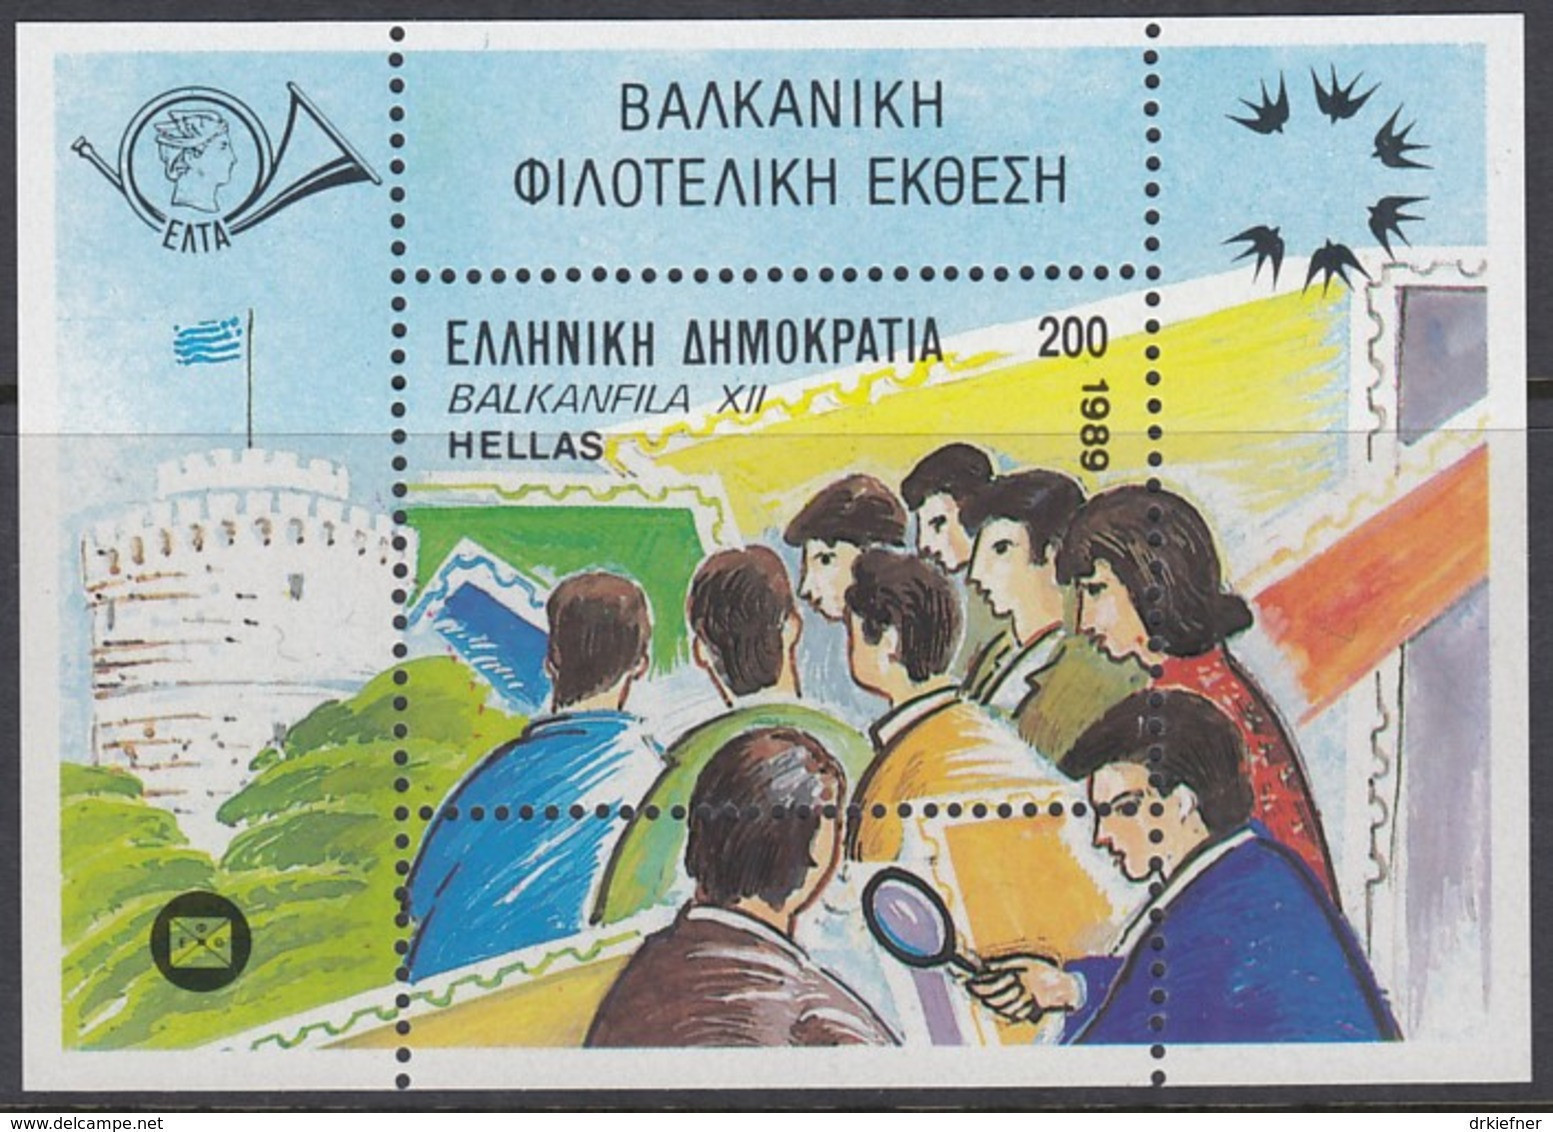 GRIECHENLAND Block 7, Postfrisch **, Internationale Briefmarkenausstellung BALKANFILA ’89, Thessaloniki, 1989 - Blocs-feuillets